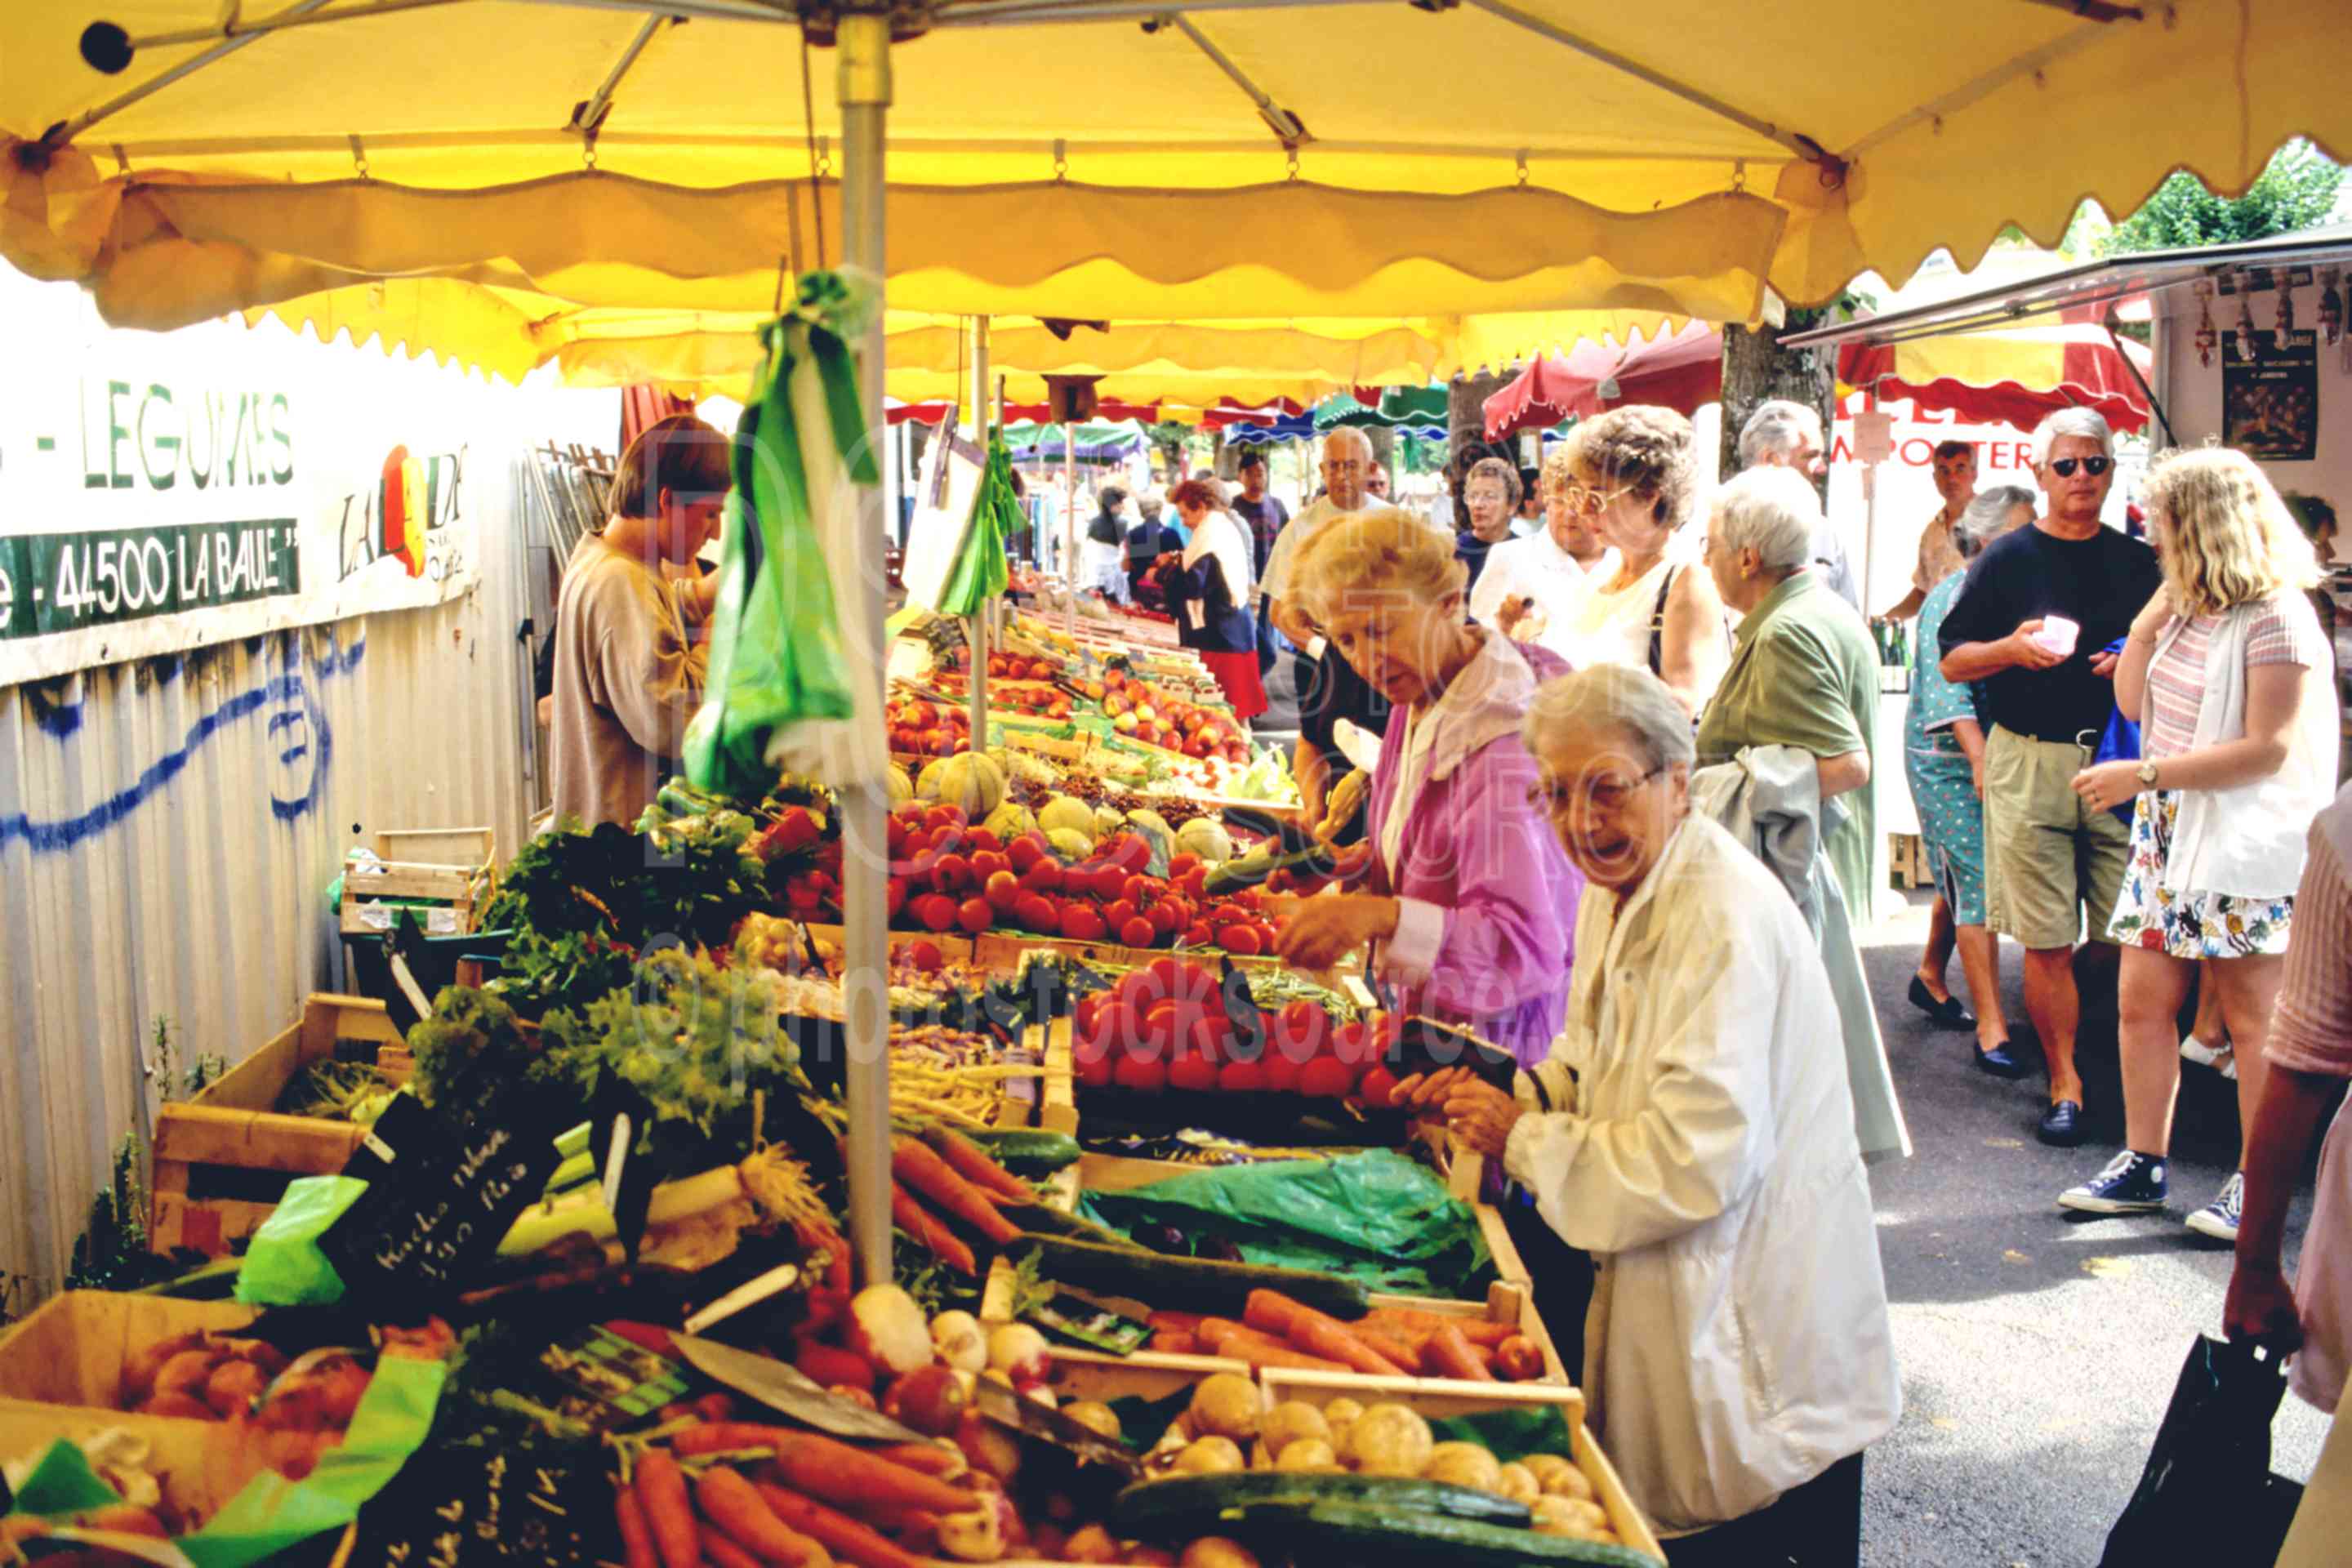 At the Market,europe,market,vegetable,markets